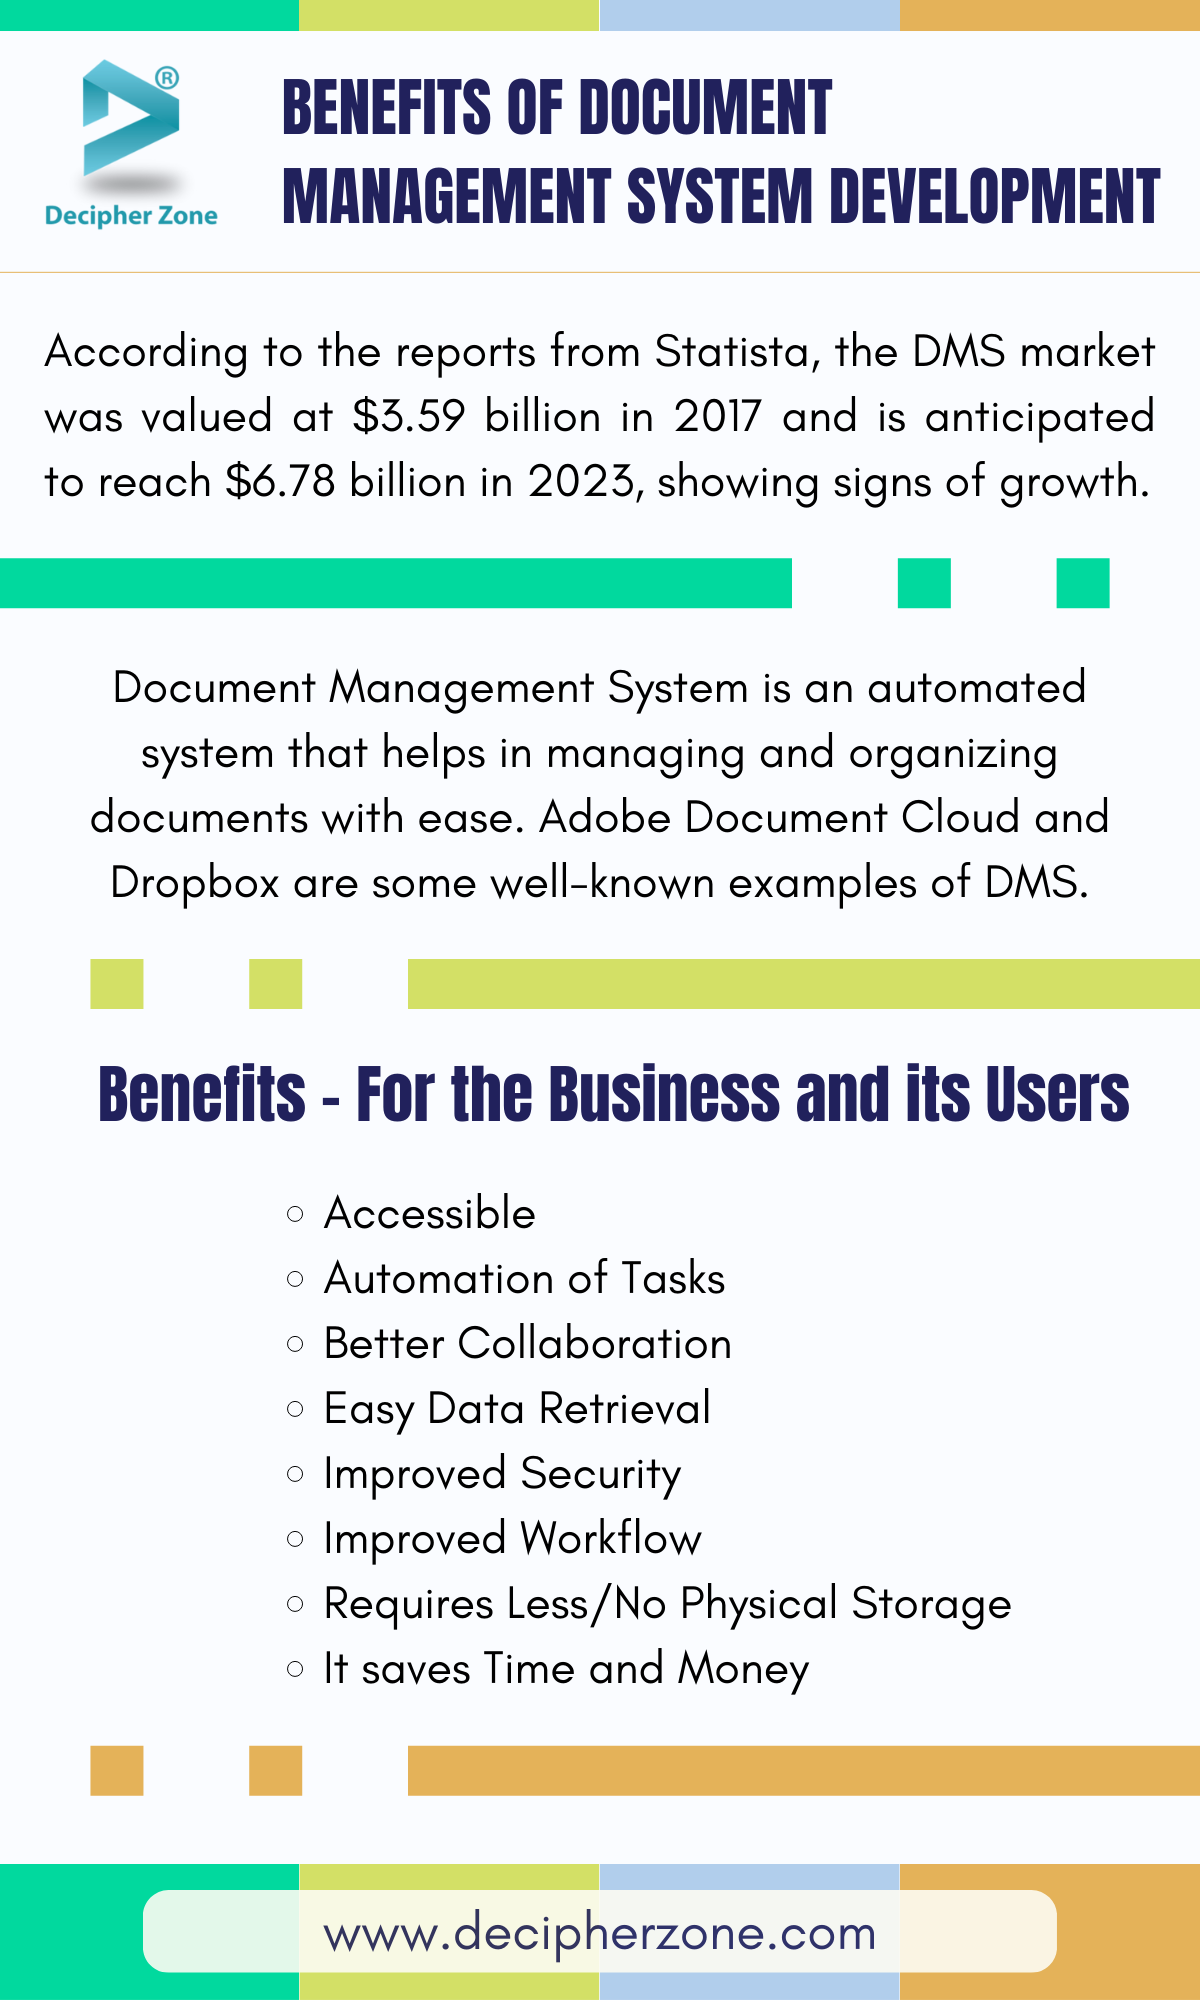 Benefits of Document Management System Development